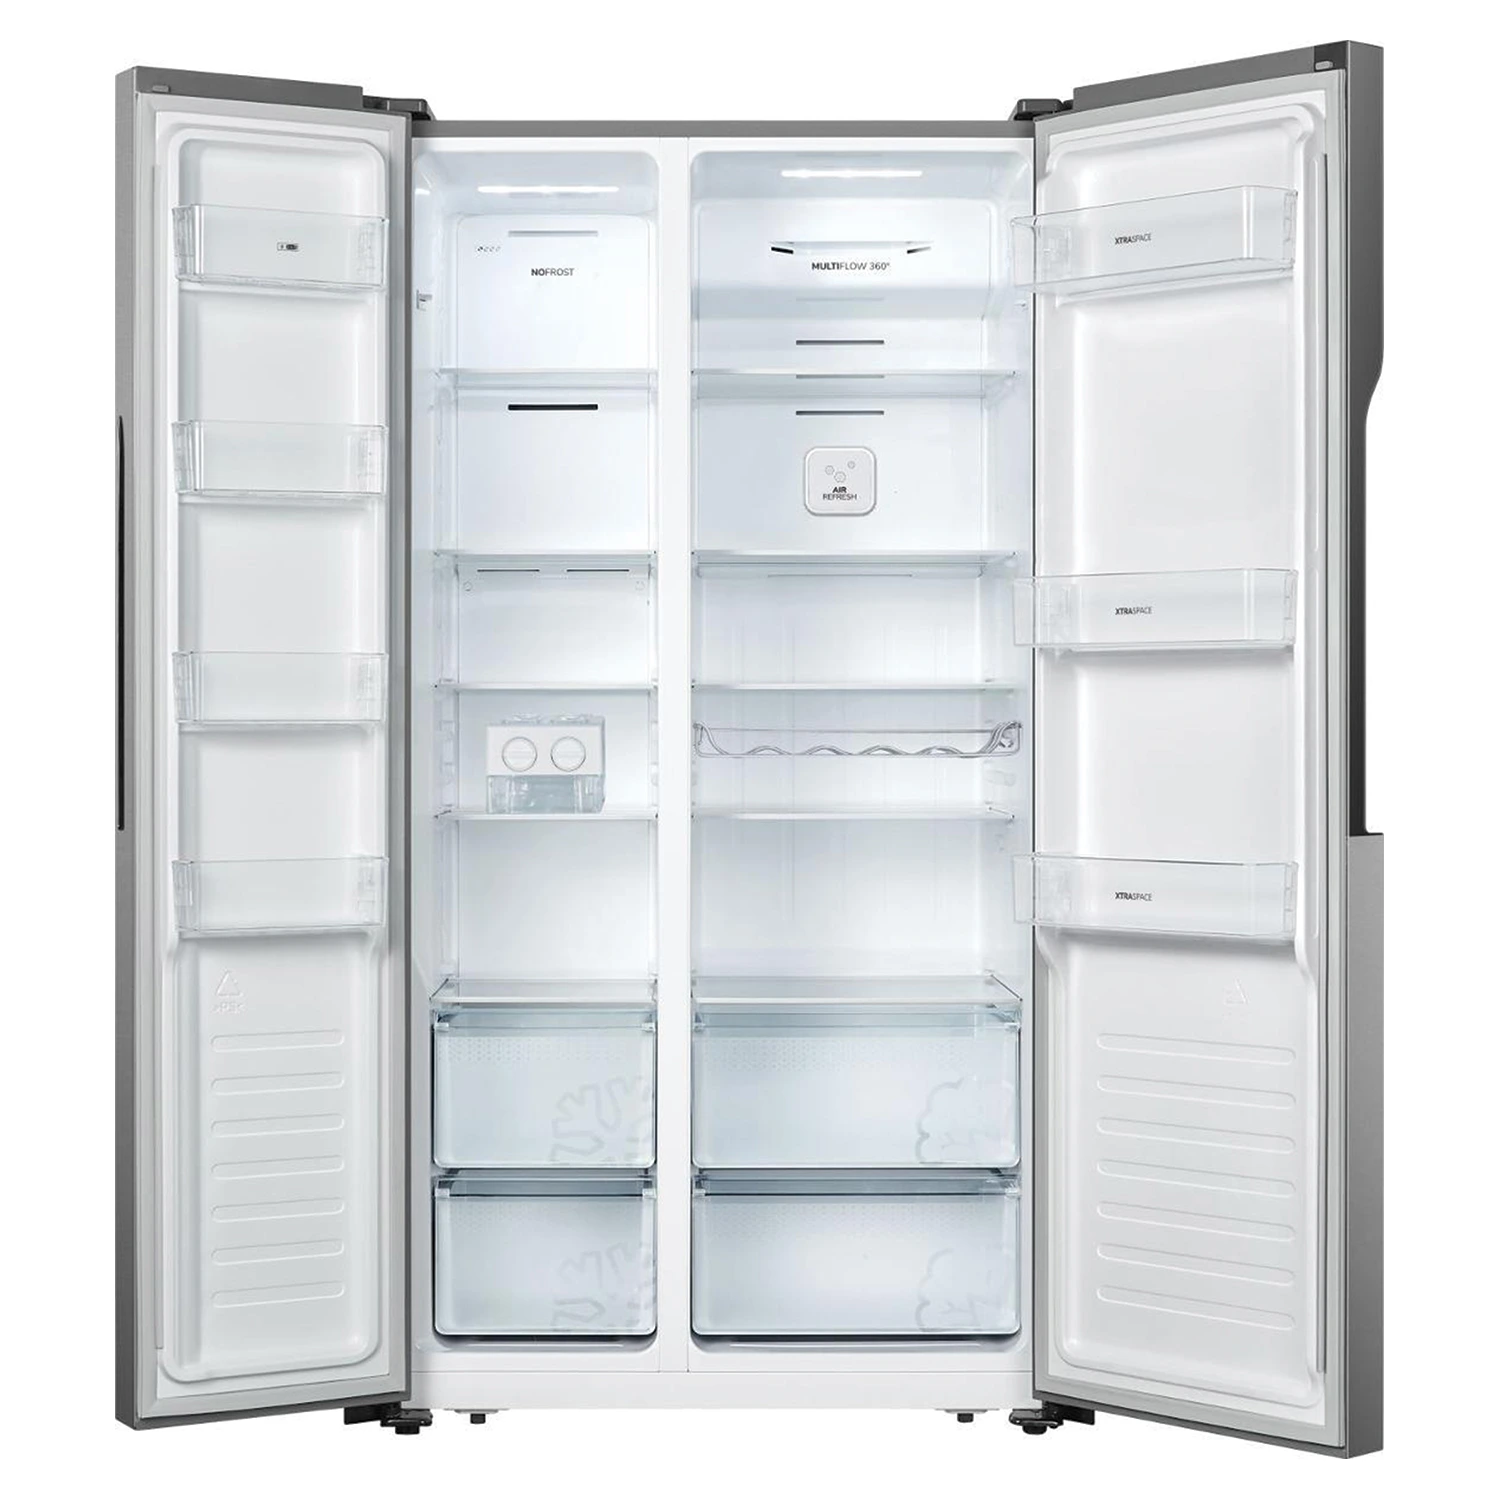 NoFrost side by side frižider sa ekranom osjetljivim na dodir.